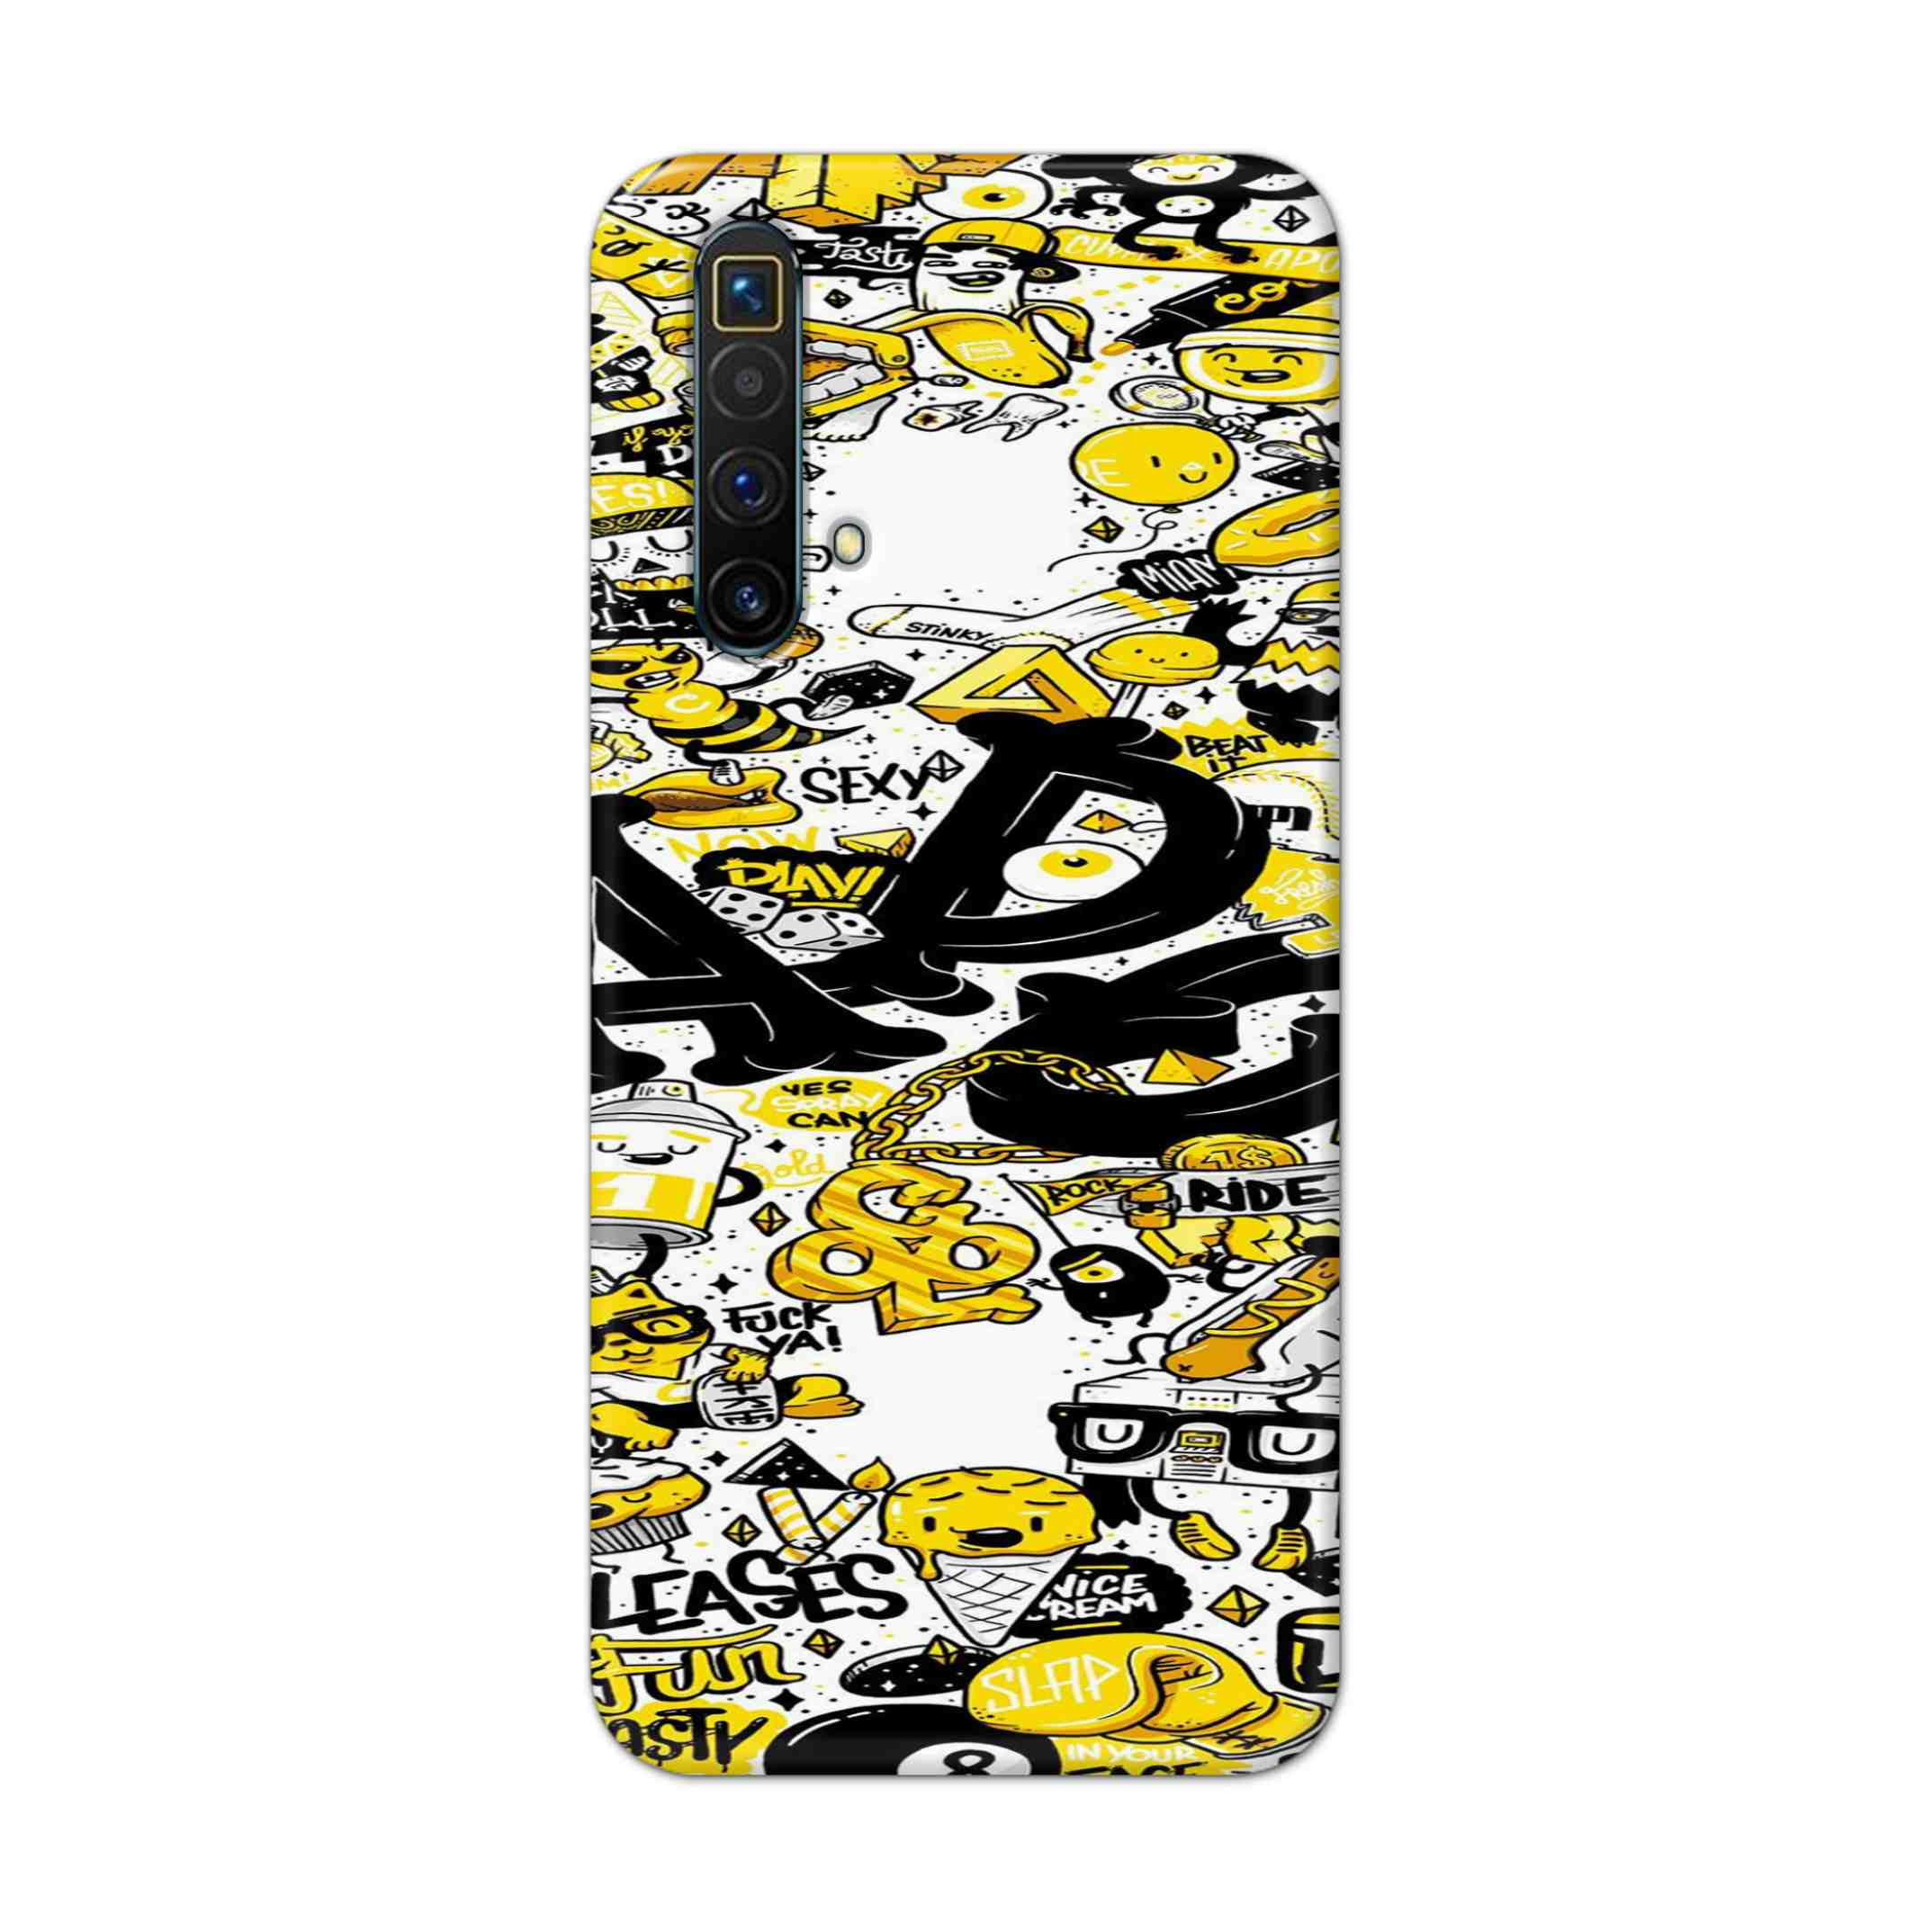 Buy Ado Hard Back Mobile Phone Case Cover For Oppo Realme X3 Online